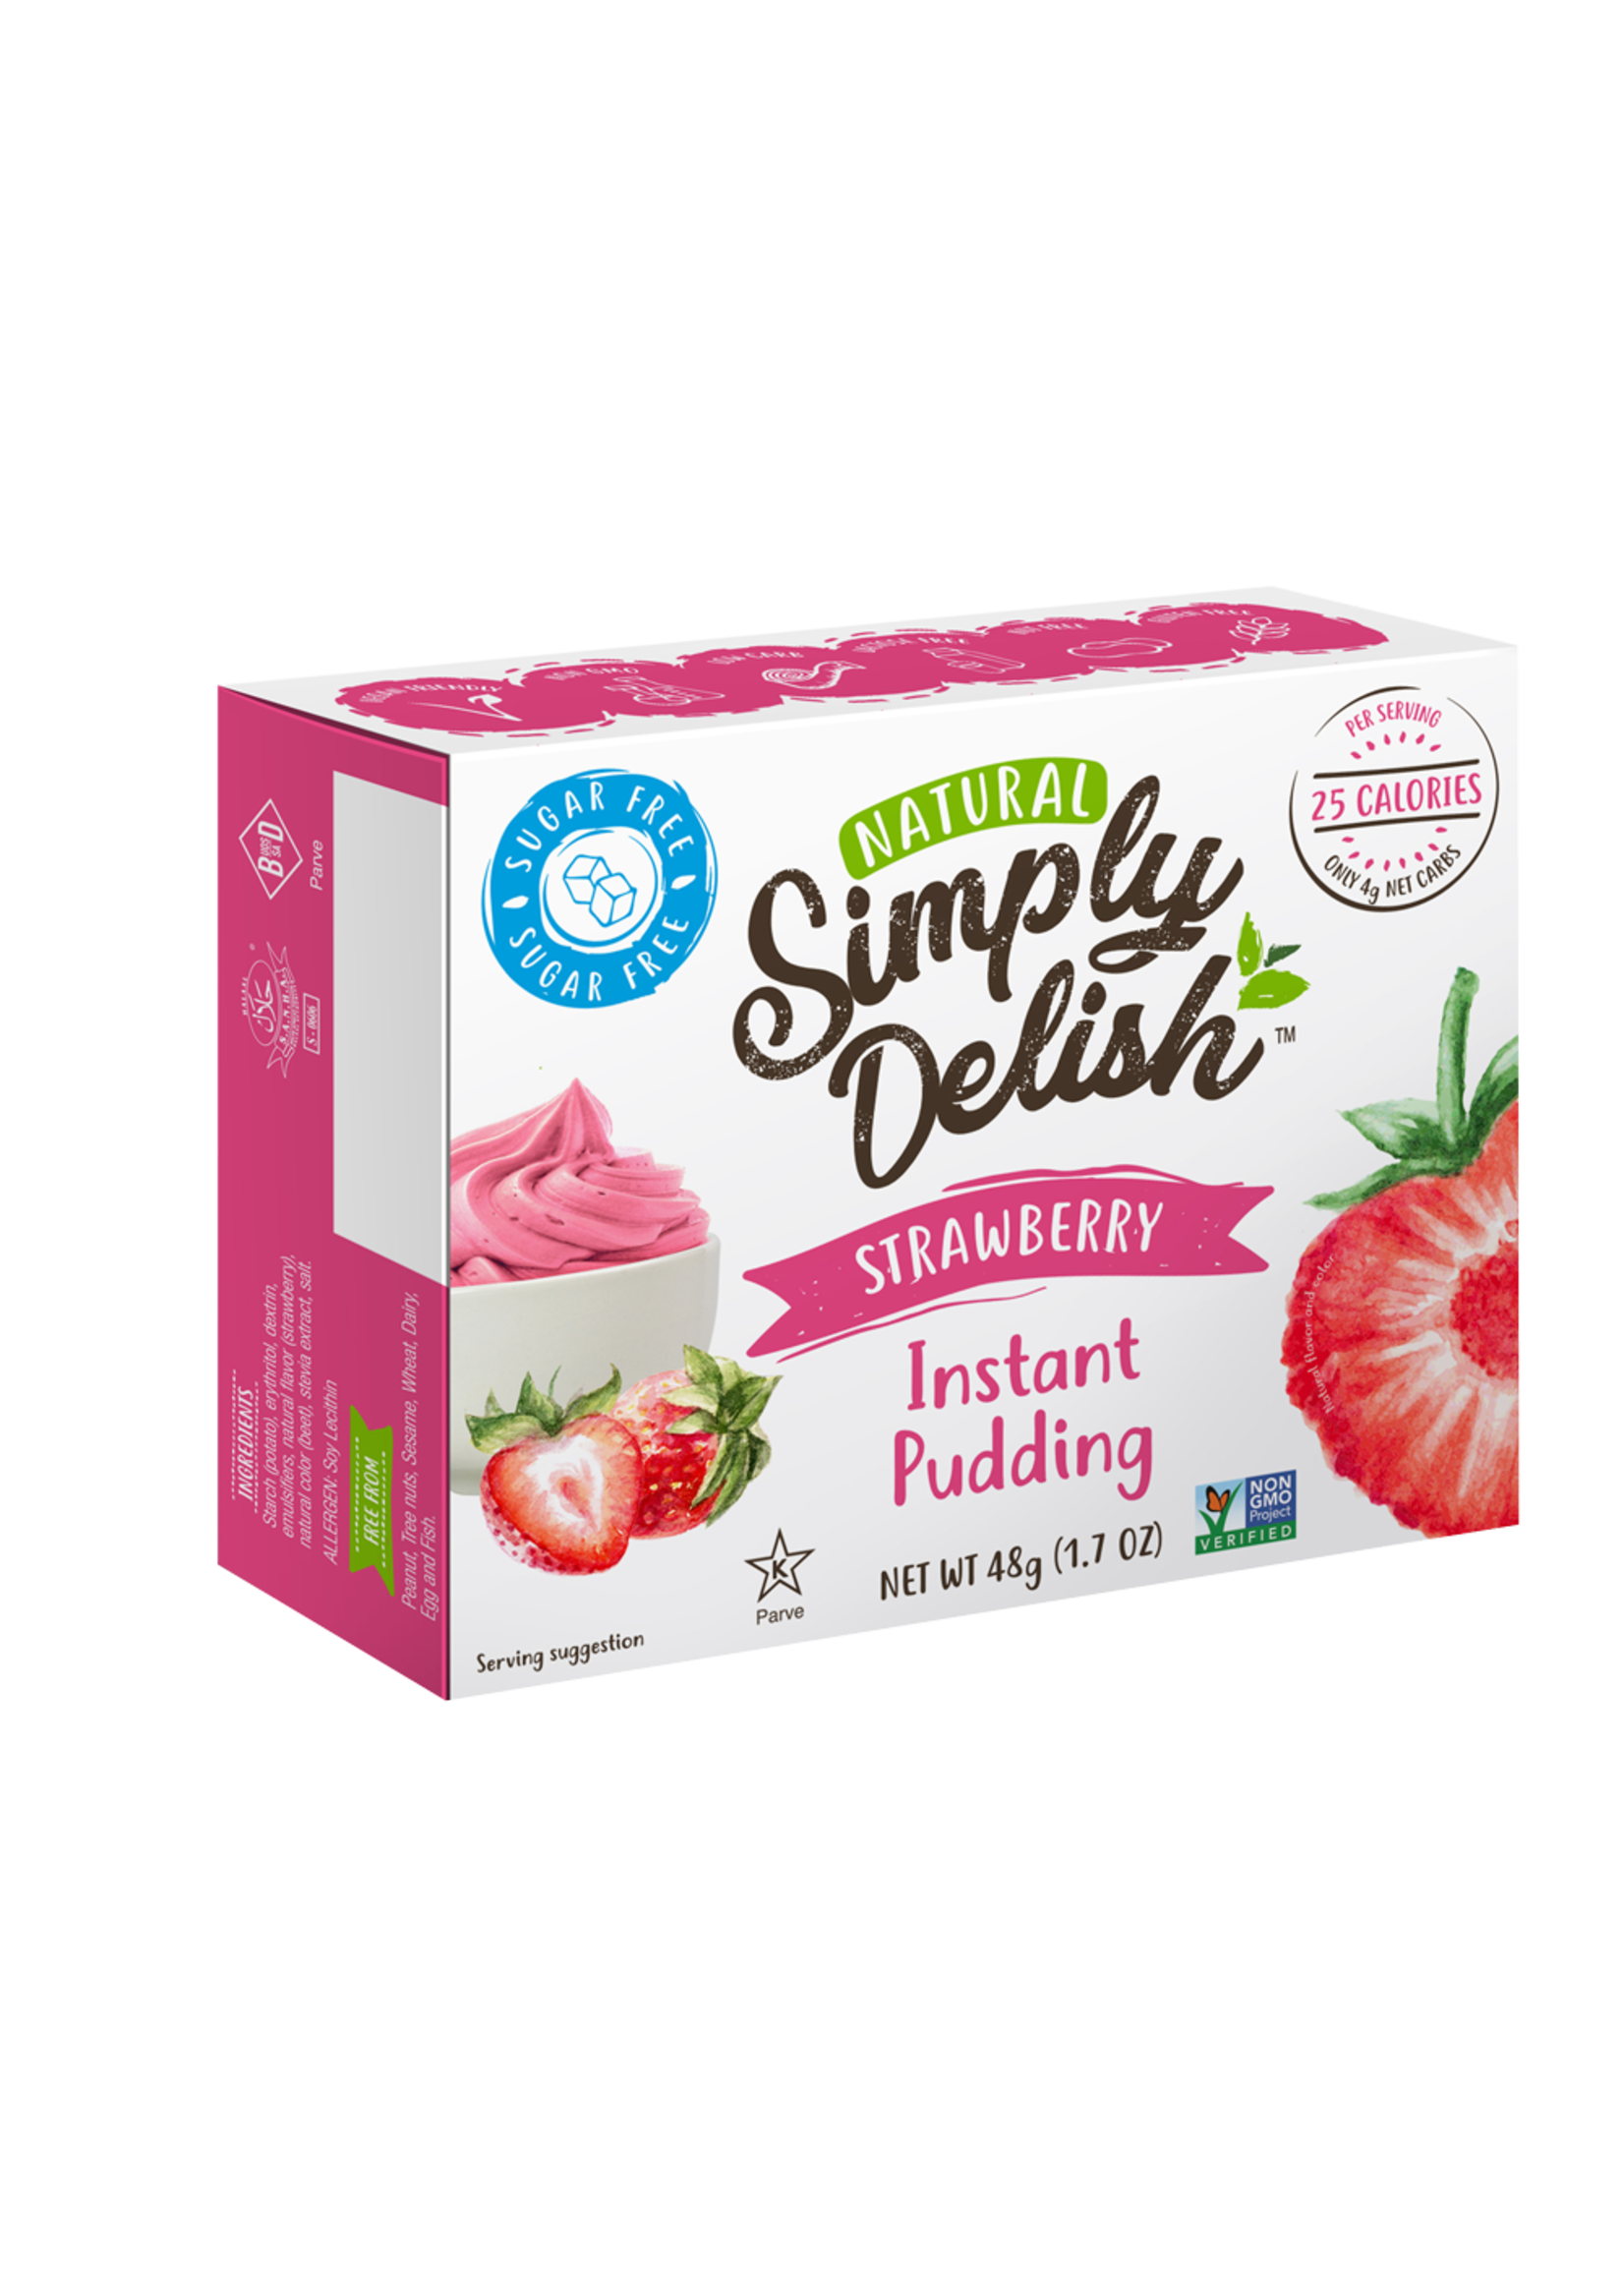 Simply Delish simply delishStrawberry Pudding